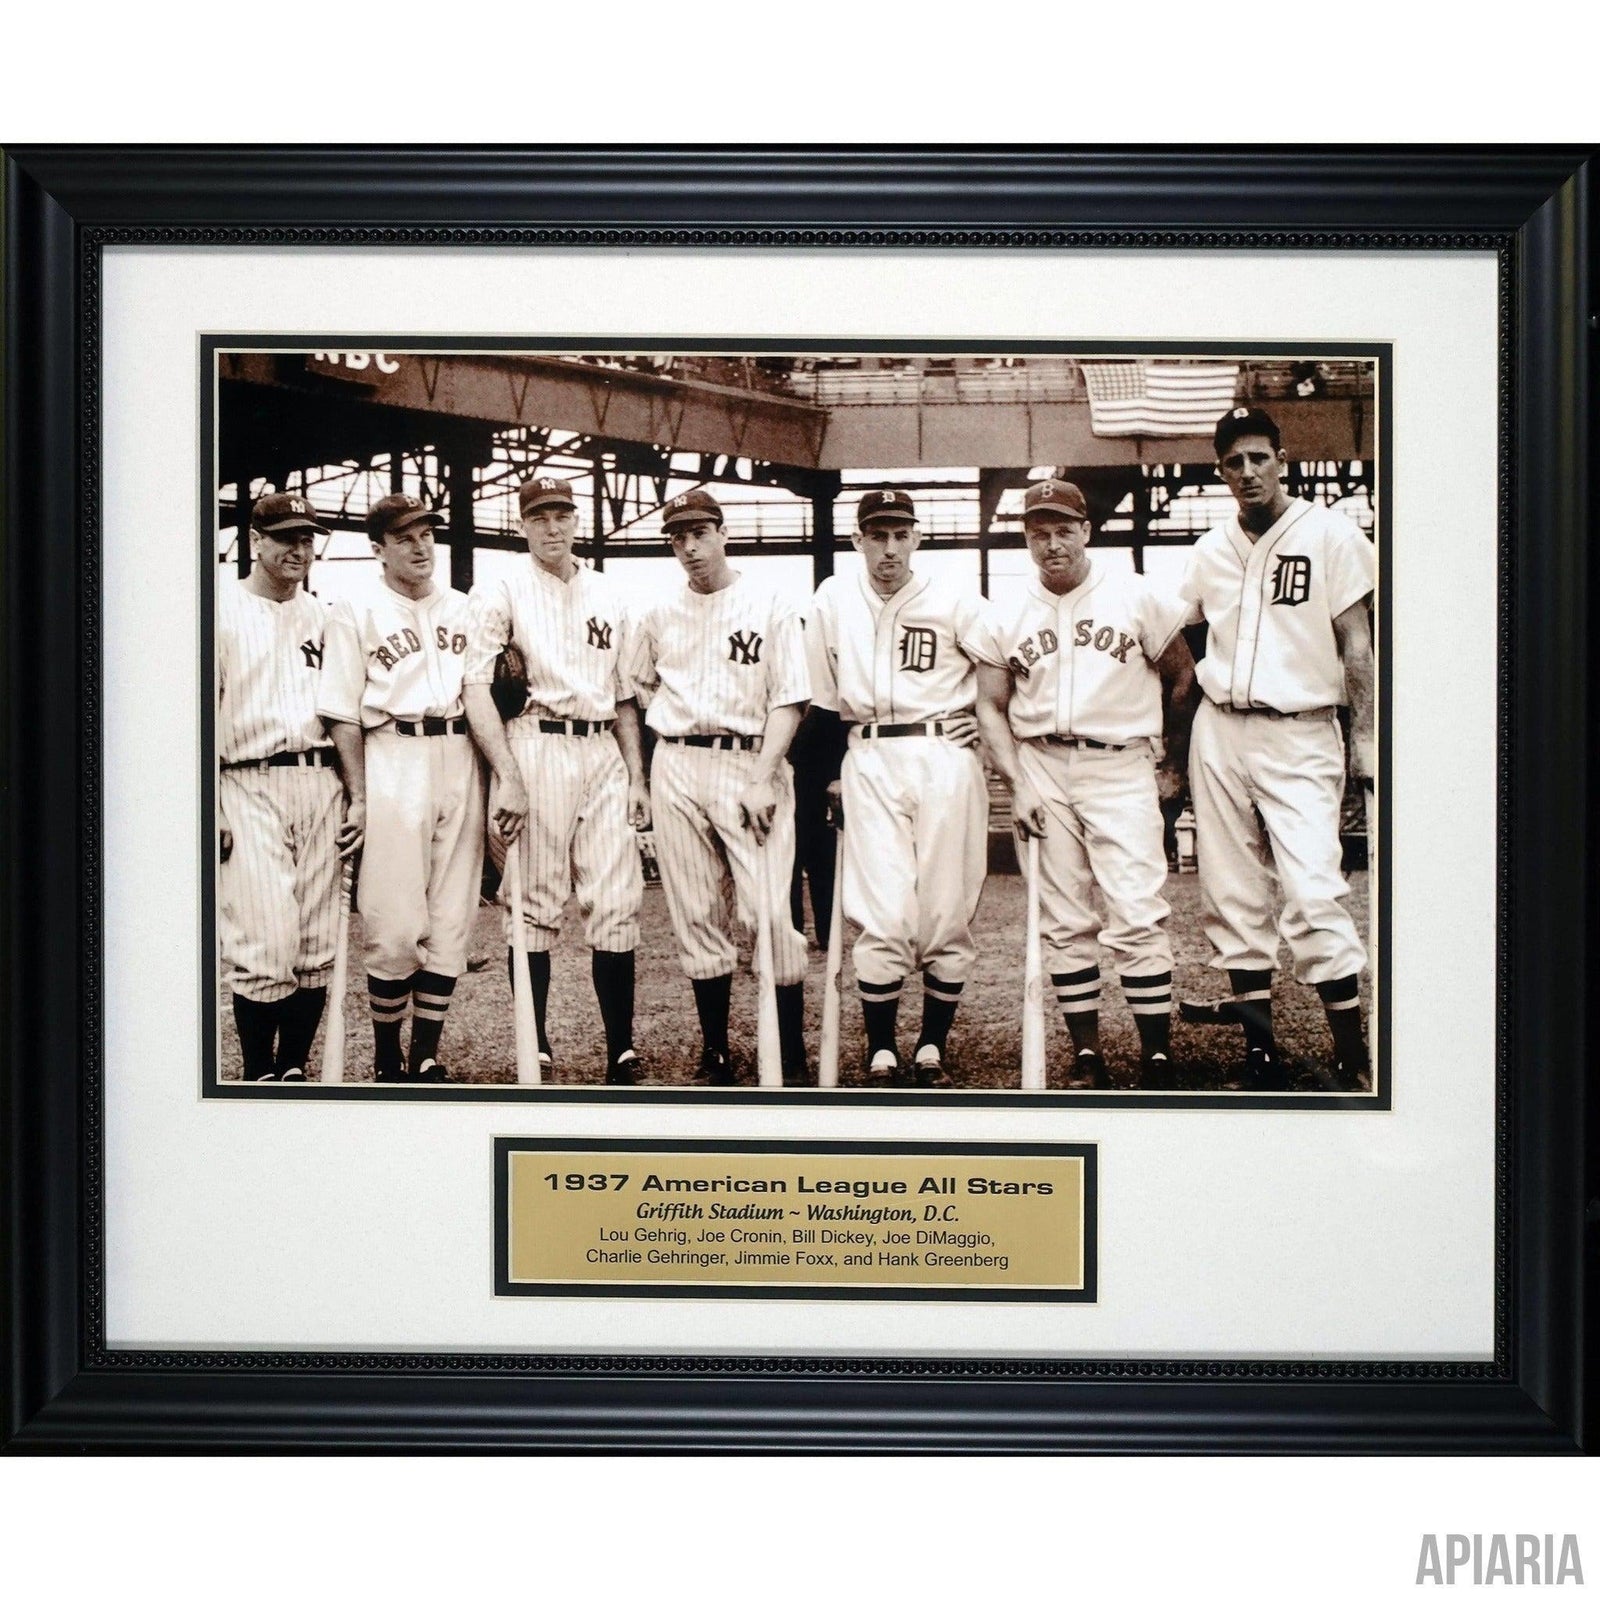 1945 Kansas City Monarchs, Jackie Robinson, Baseball Negro League - Apiaria